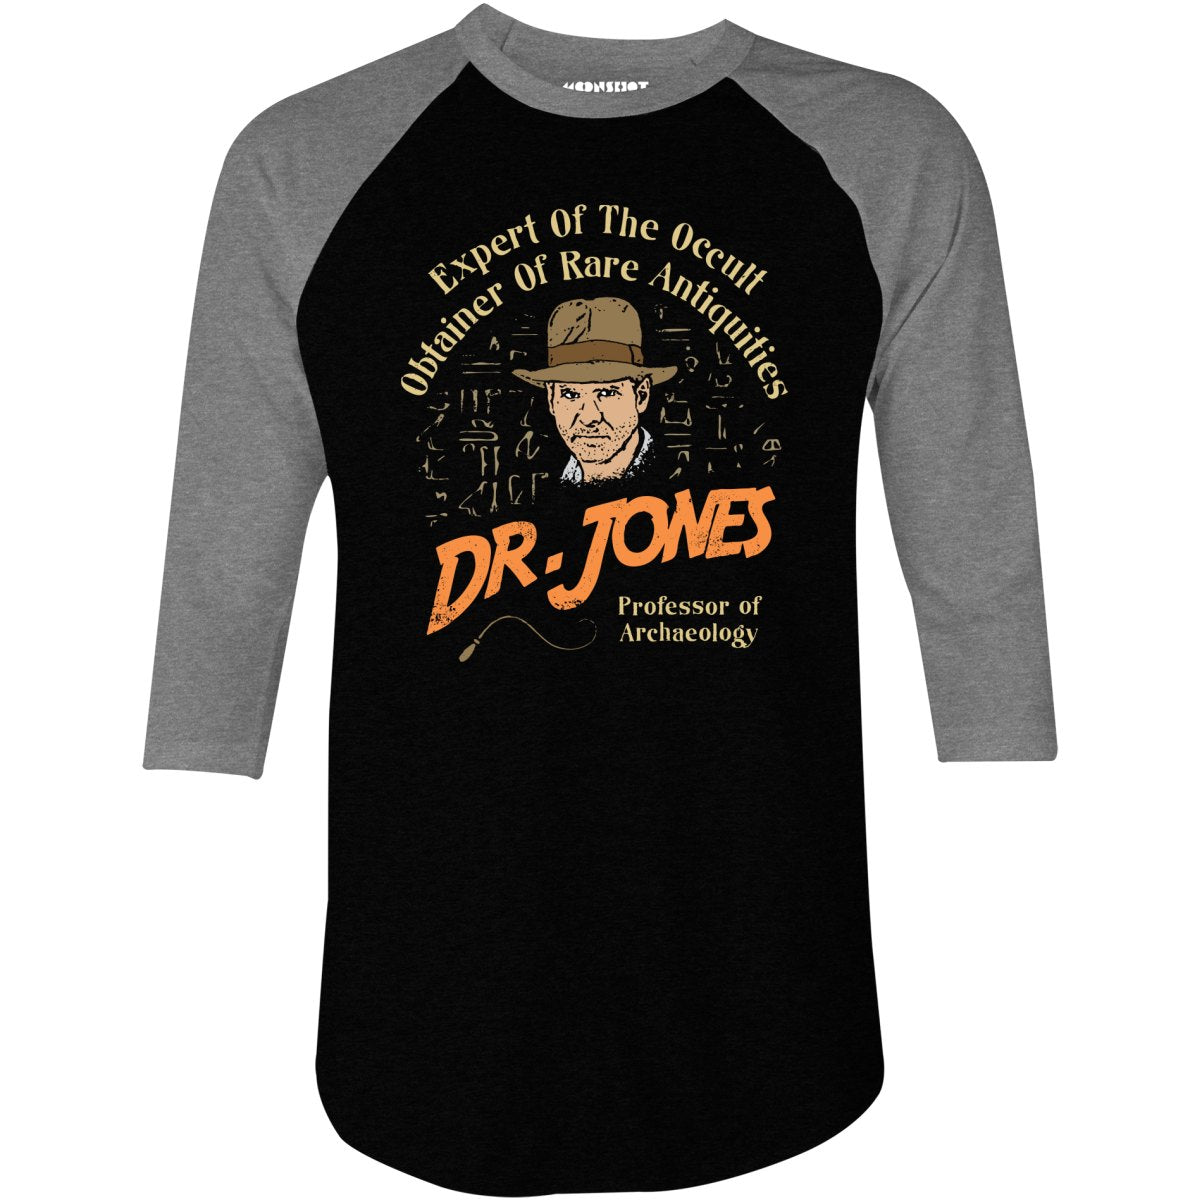 Dr. Jones Professor of Archaeology - 3/4 Sleeve Raglan T-Shirt